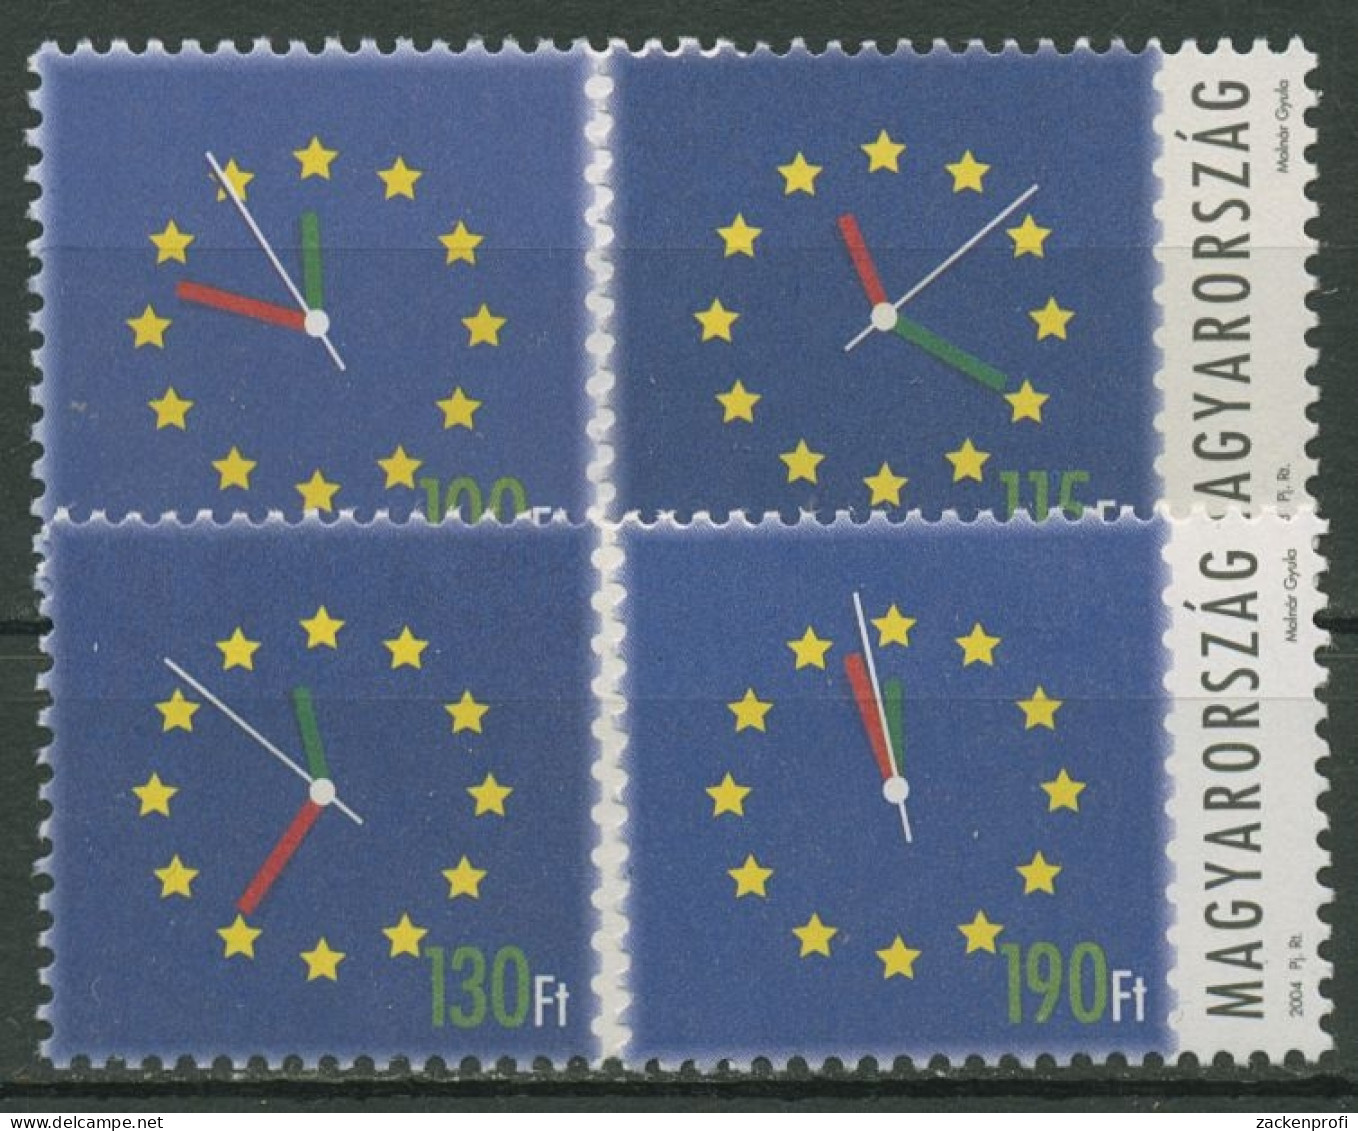 Ungarn 2003/04 Europä.Union Ziffernblatt 4808, 4814, 4837, 4844 Postfrisch - Ongebruikt